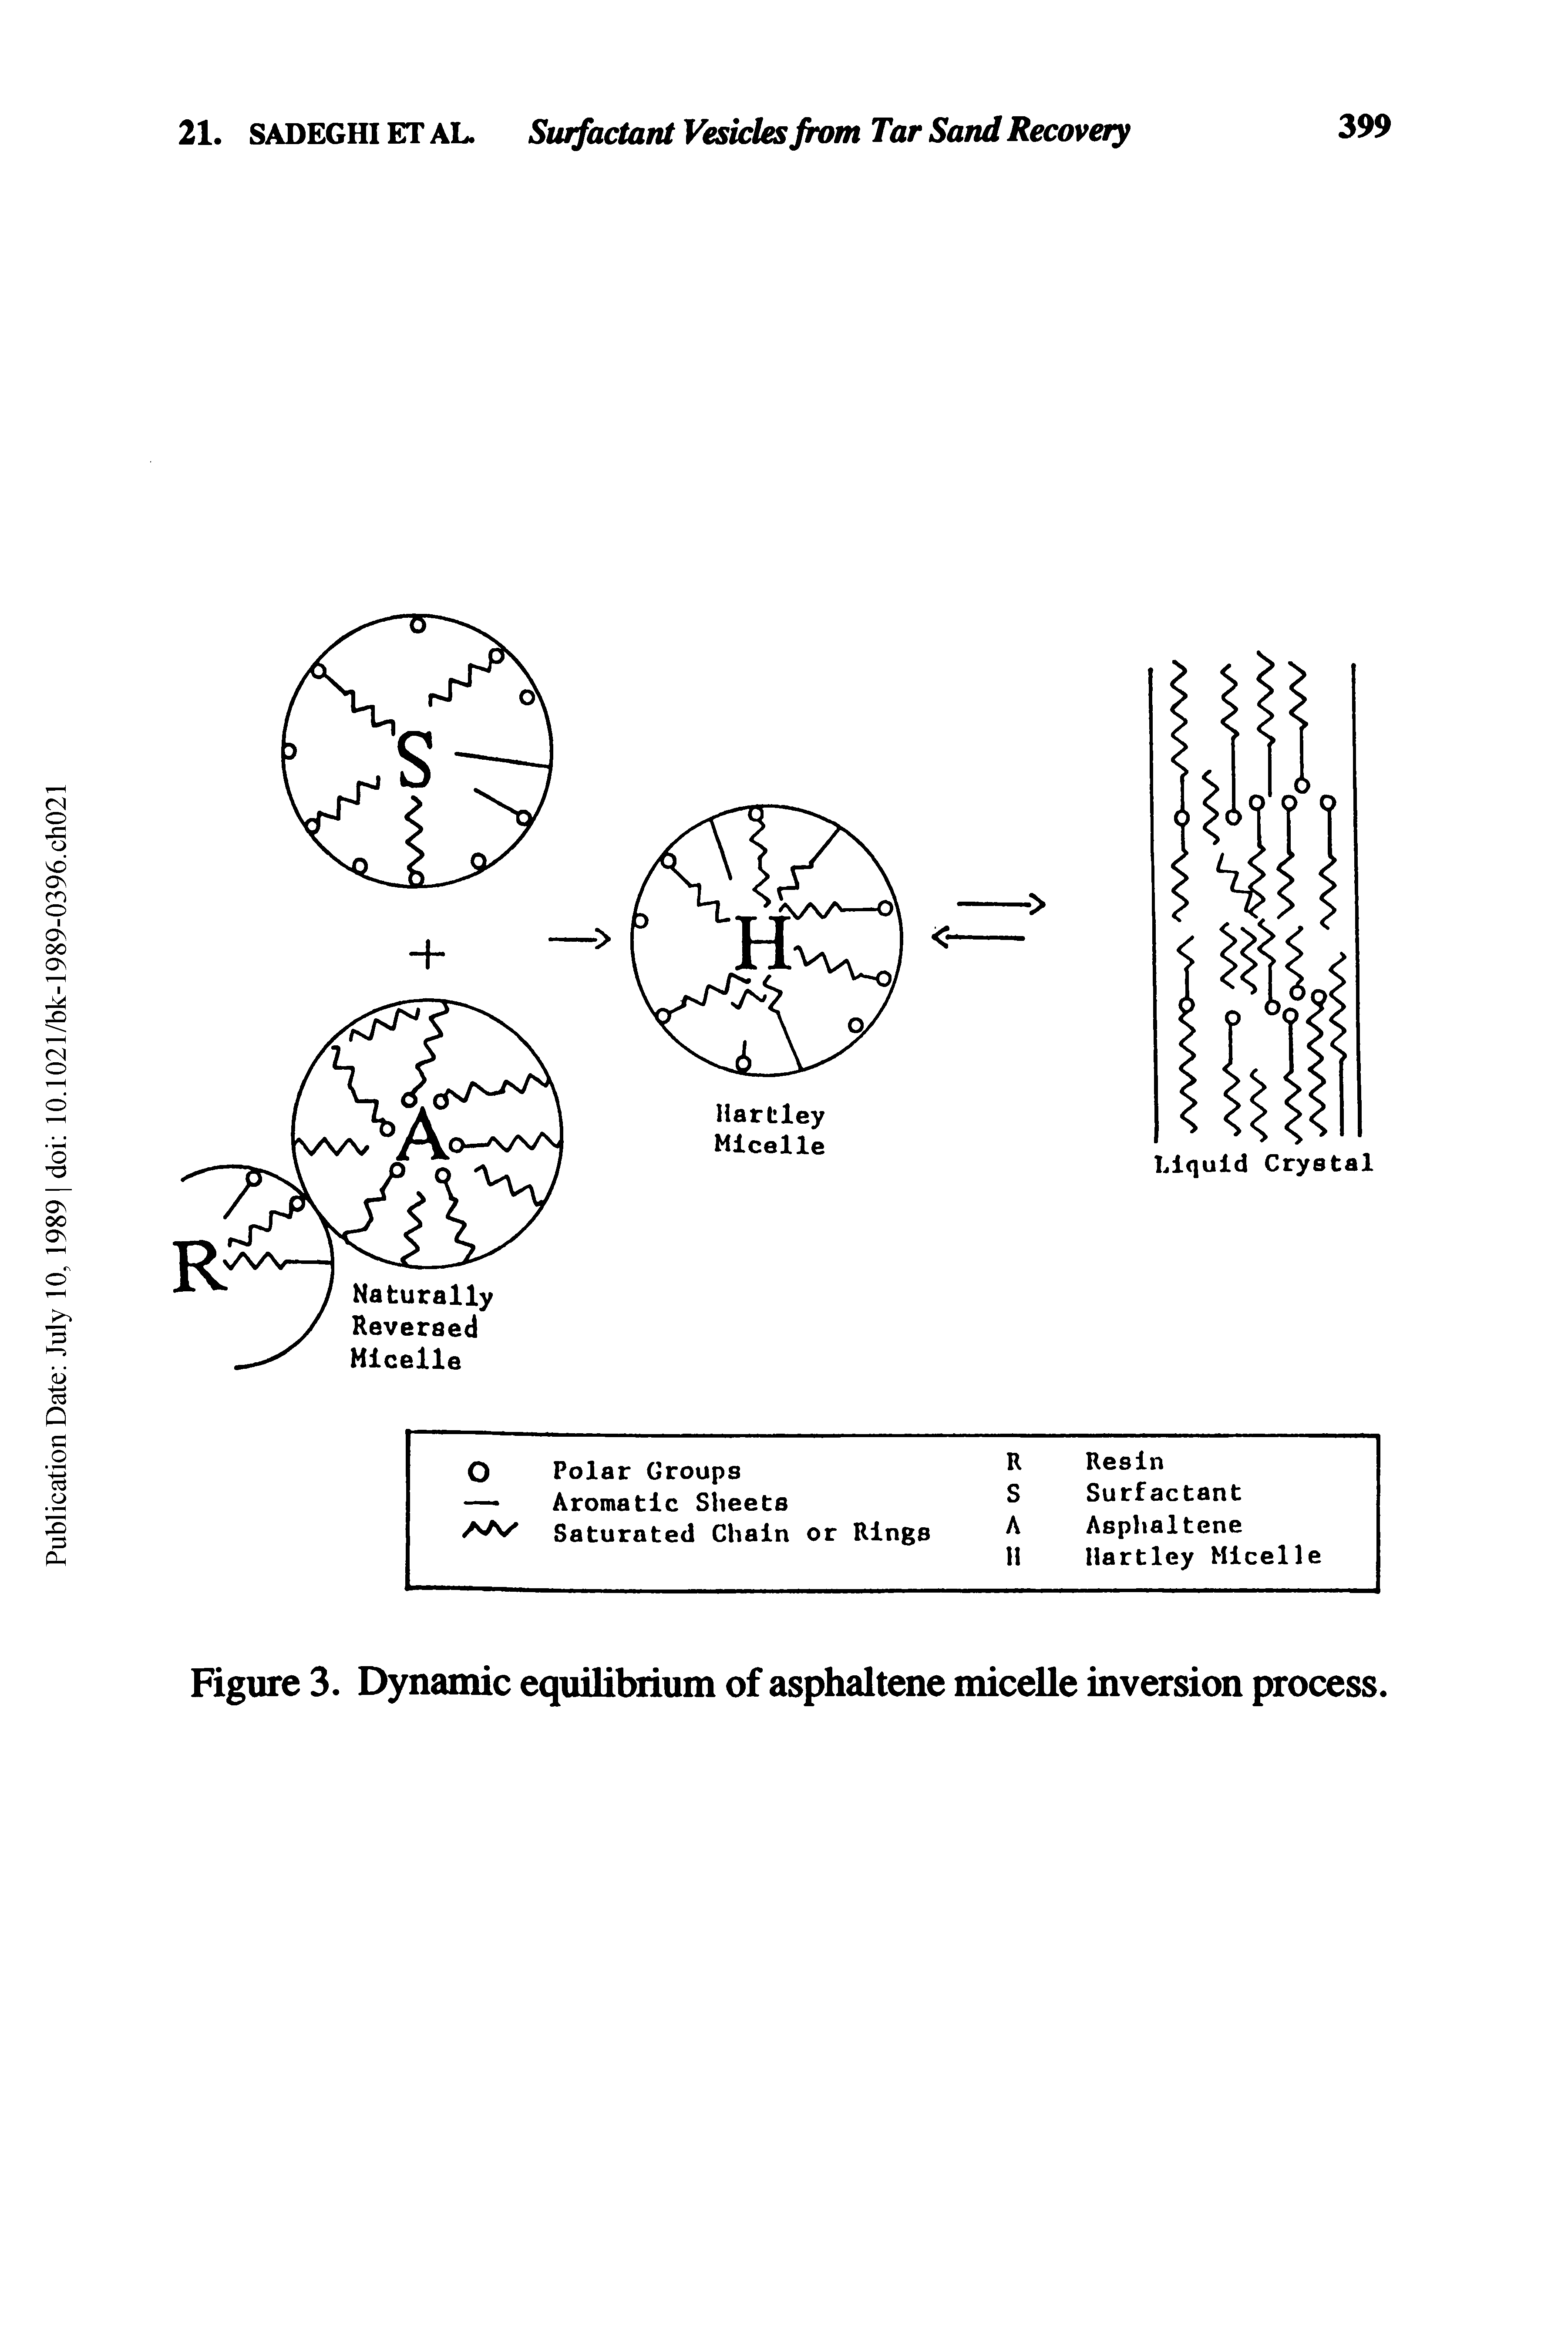 Figure 3. Dynamic equilibrium of asphaltene micelle inversion process.